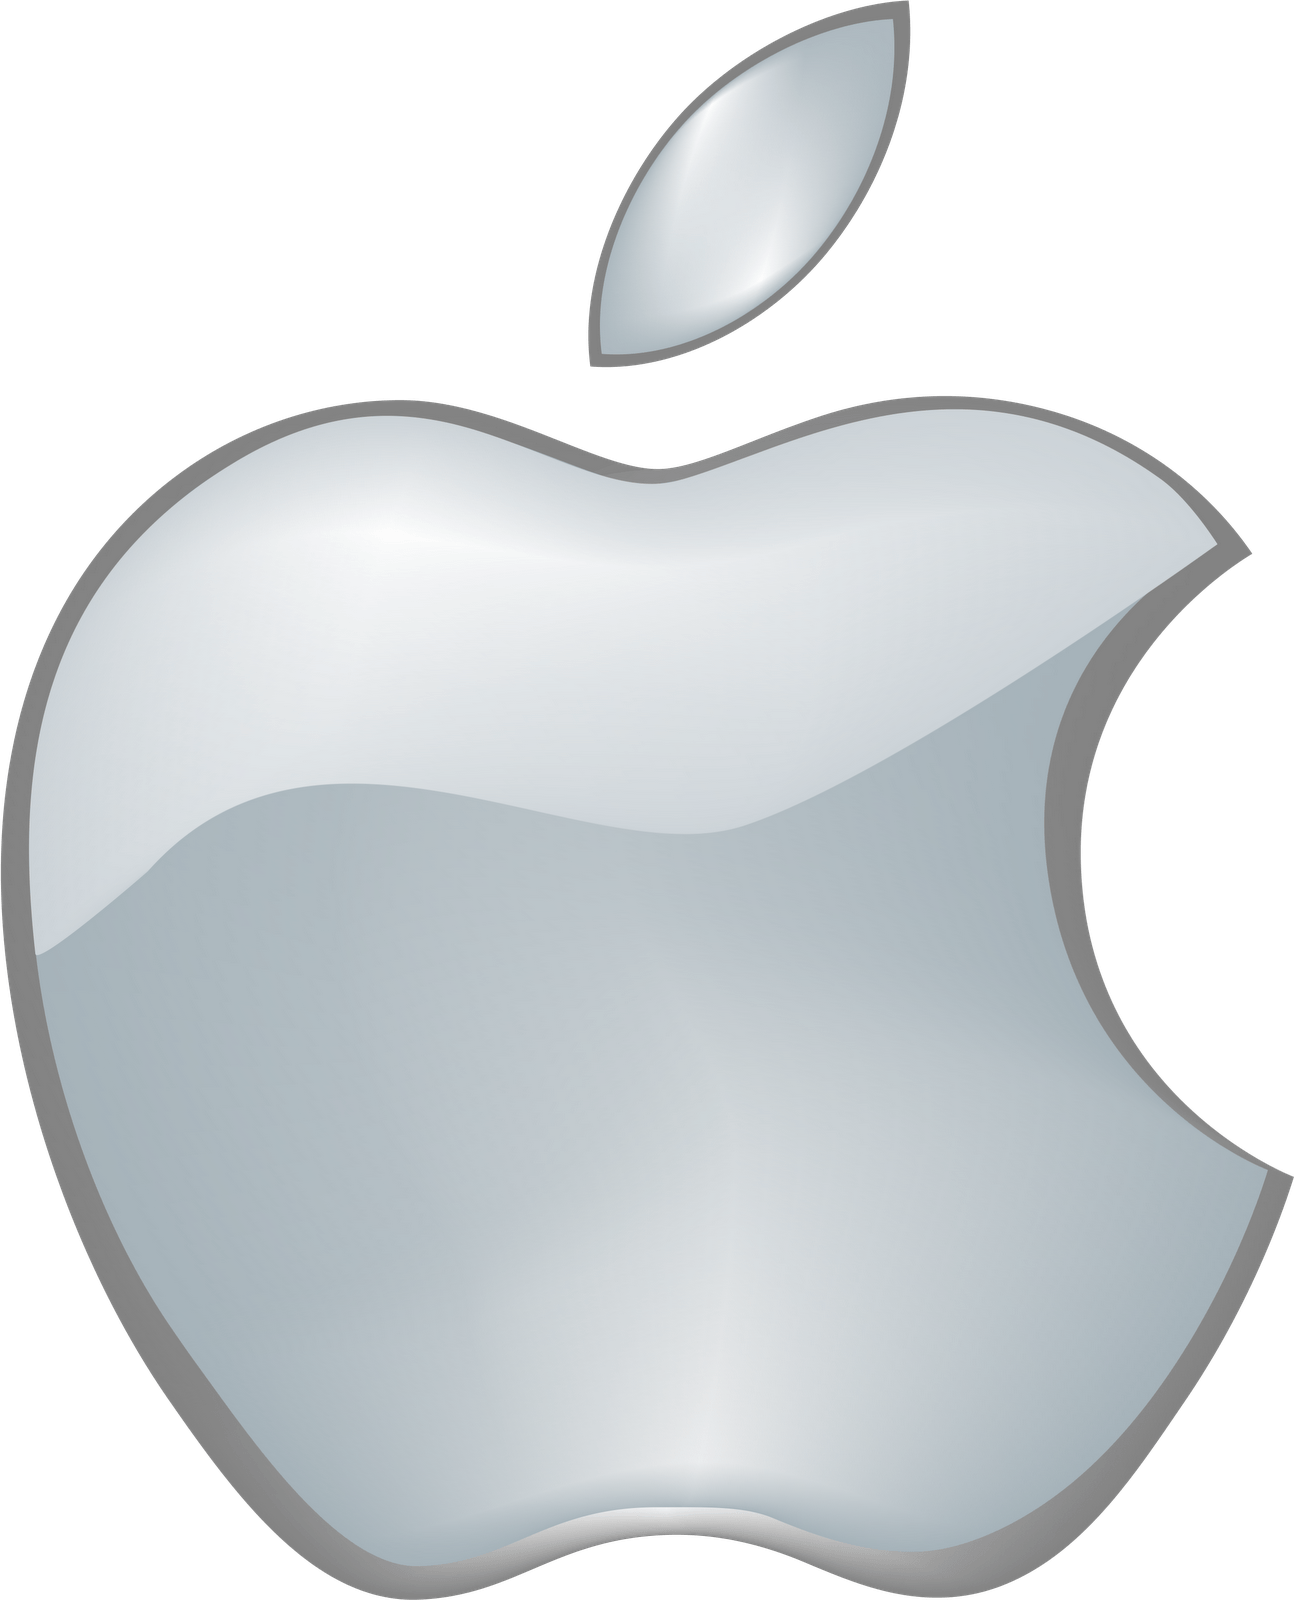 2015 Apple Logo - Assignment One: Logos